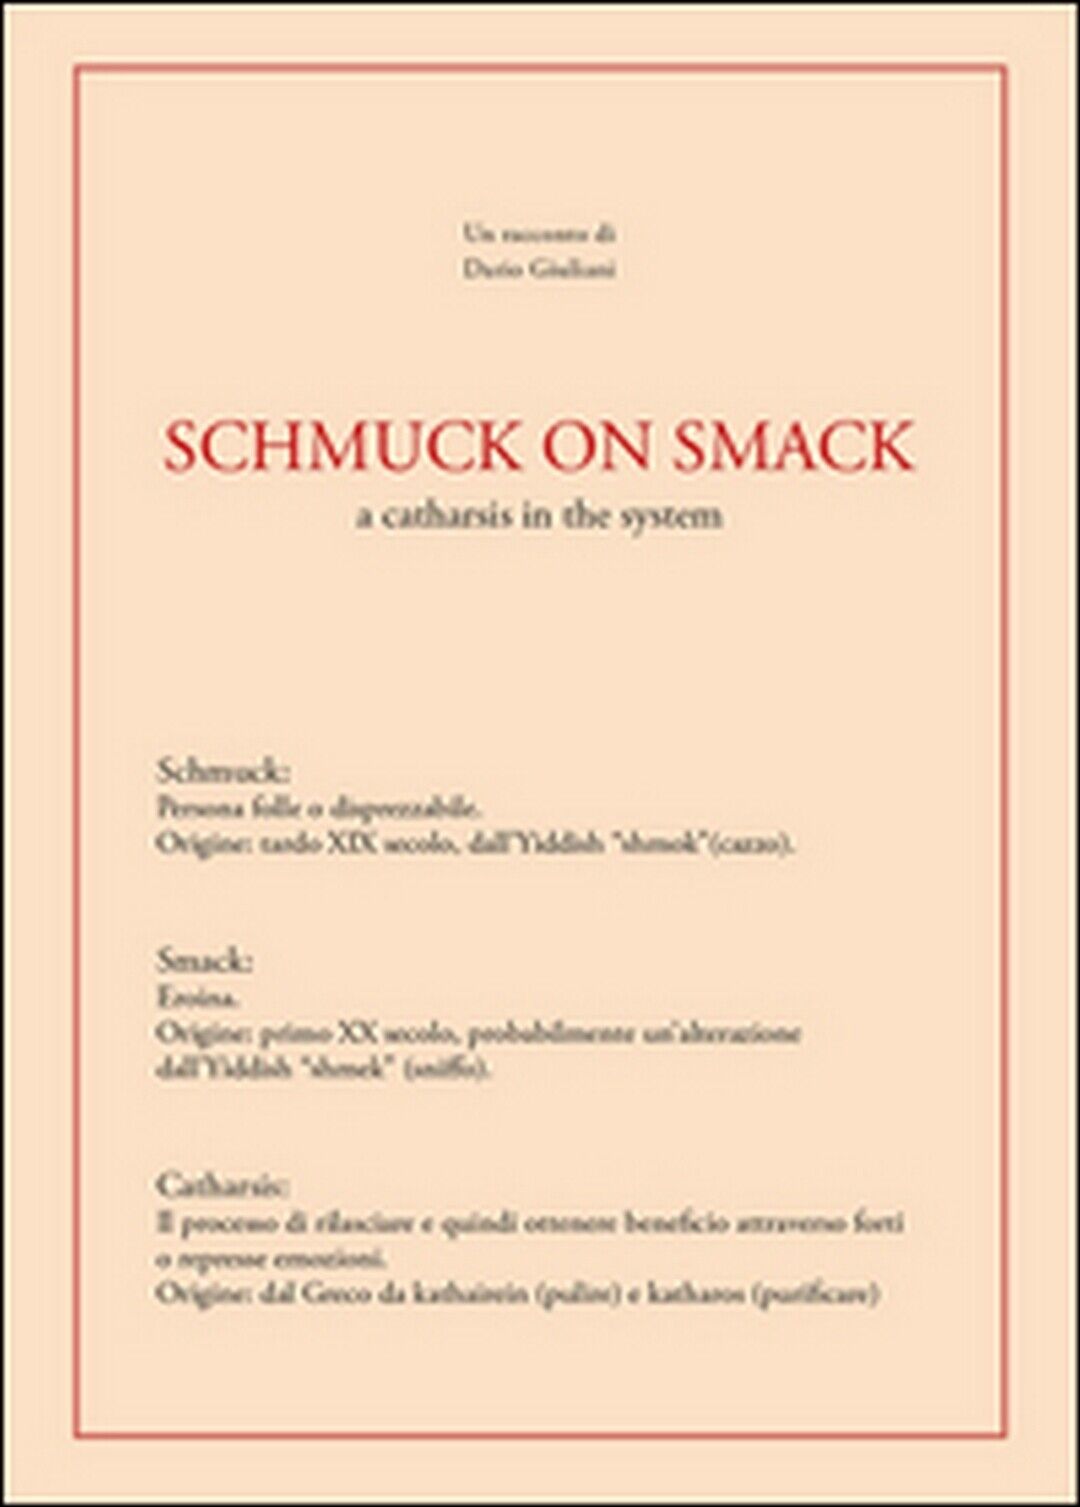 Schmuck on smack  di Dario Giuliani,  2015,  Youcanprint